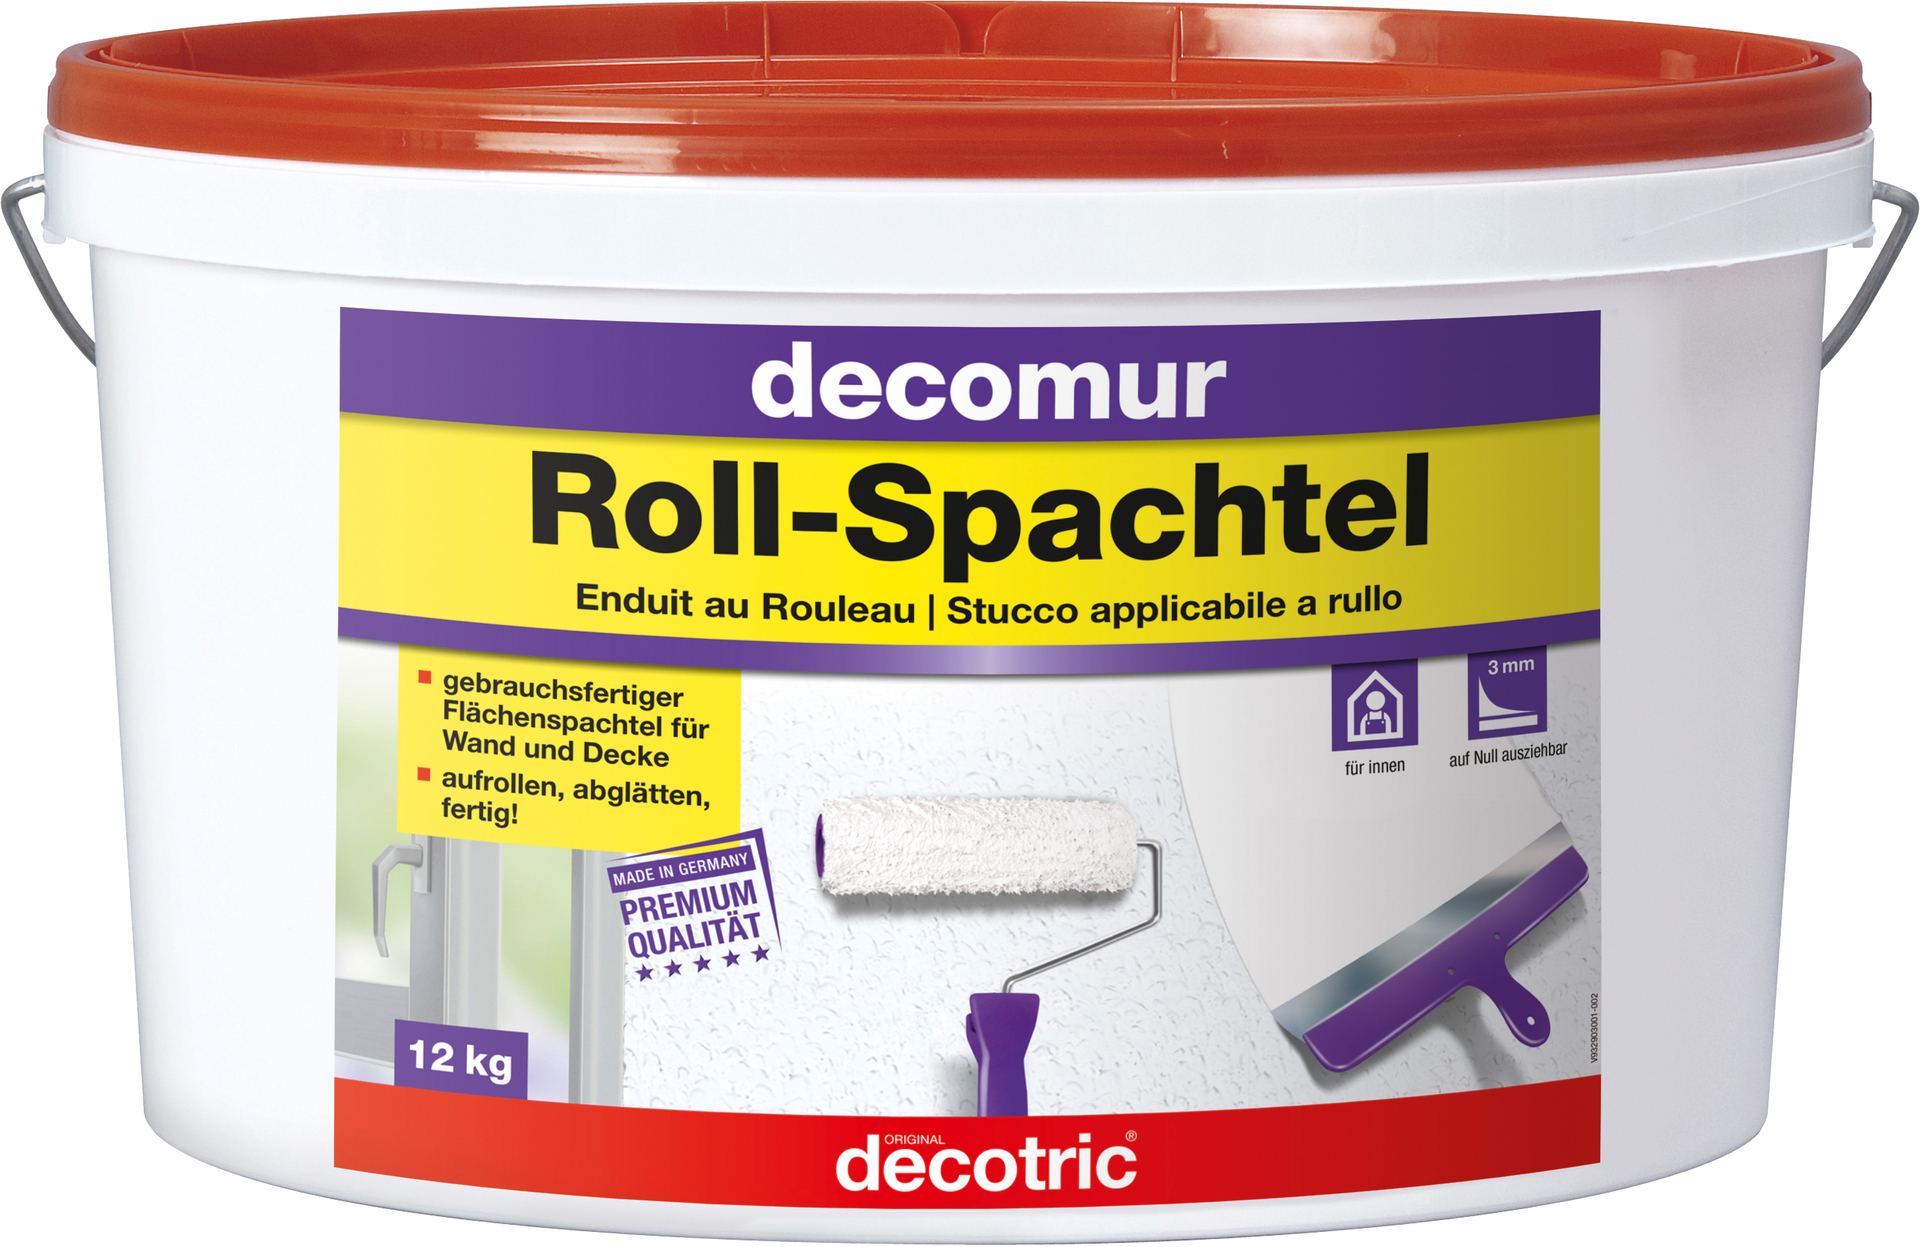 decotric decomur Roll-Spachtel